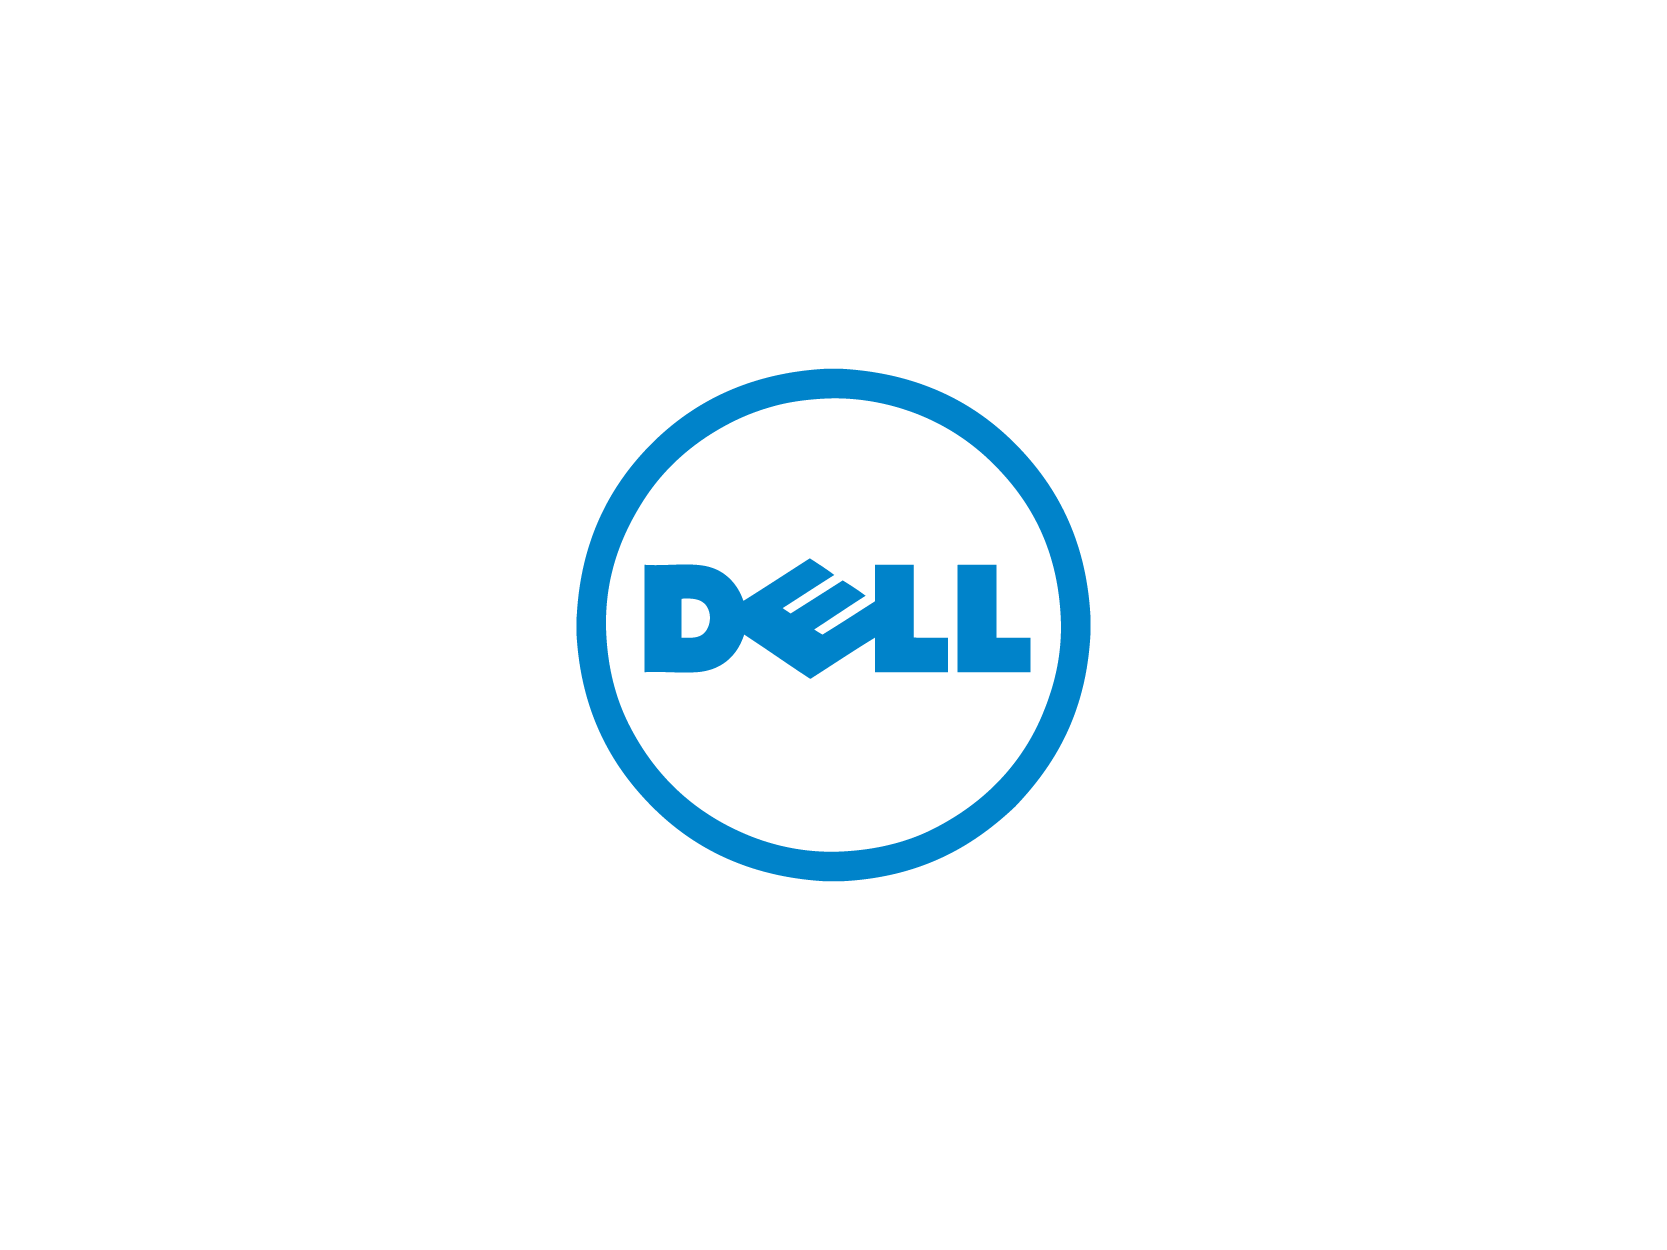 DELL戴尔logo高清图标